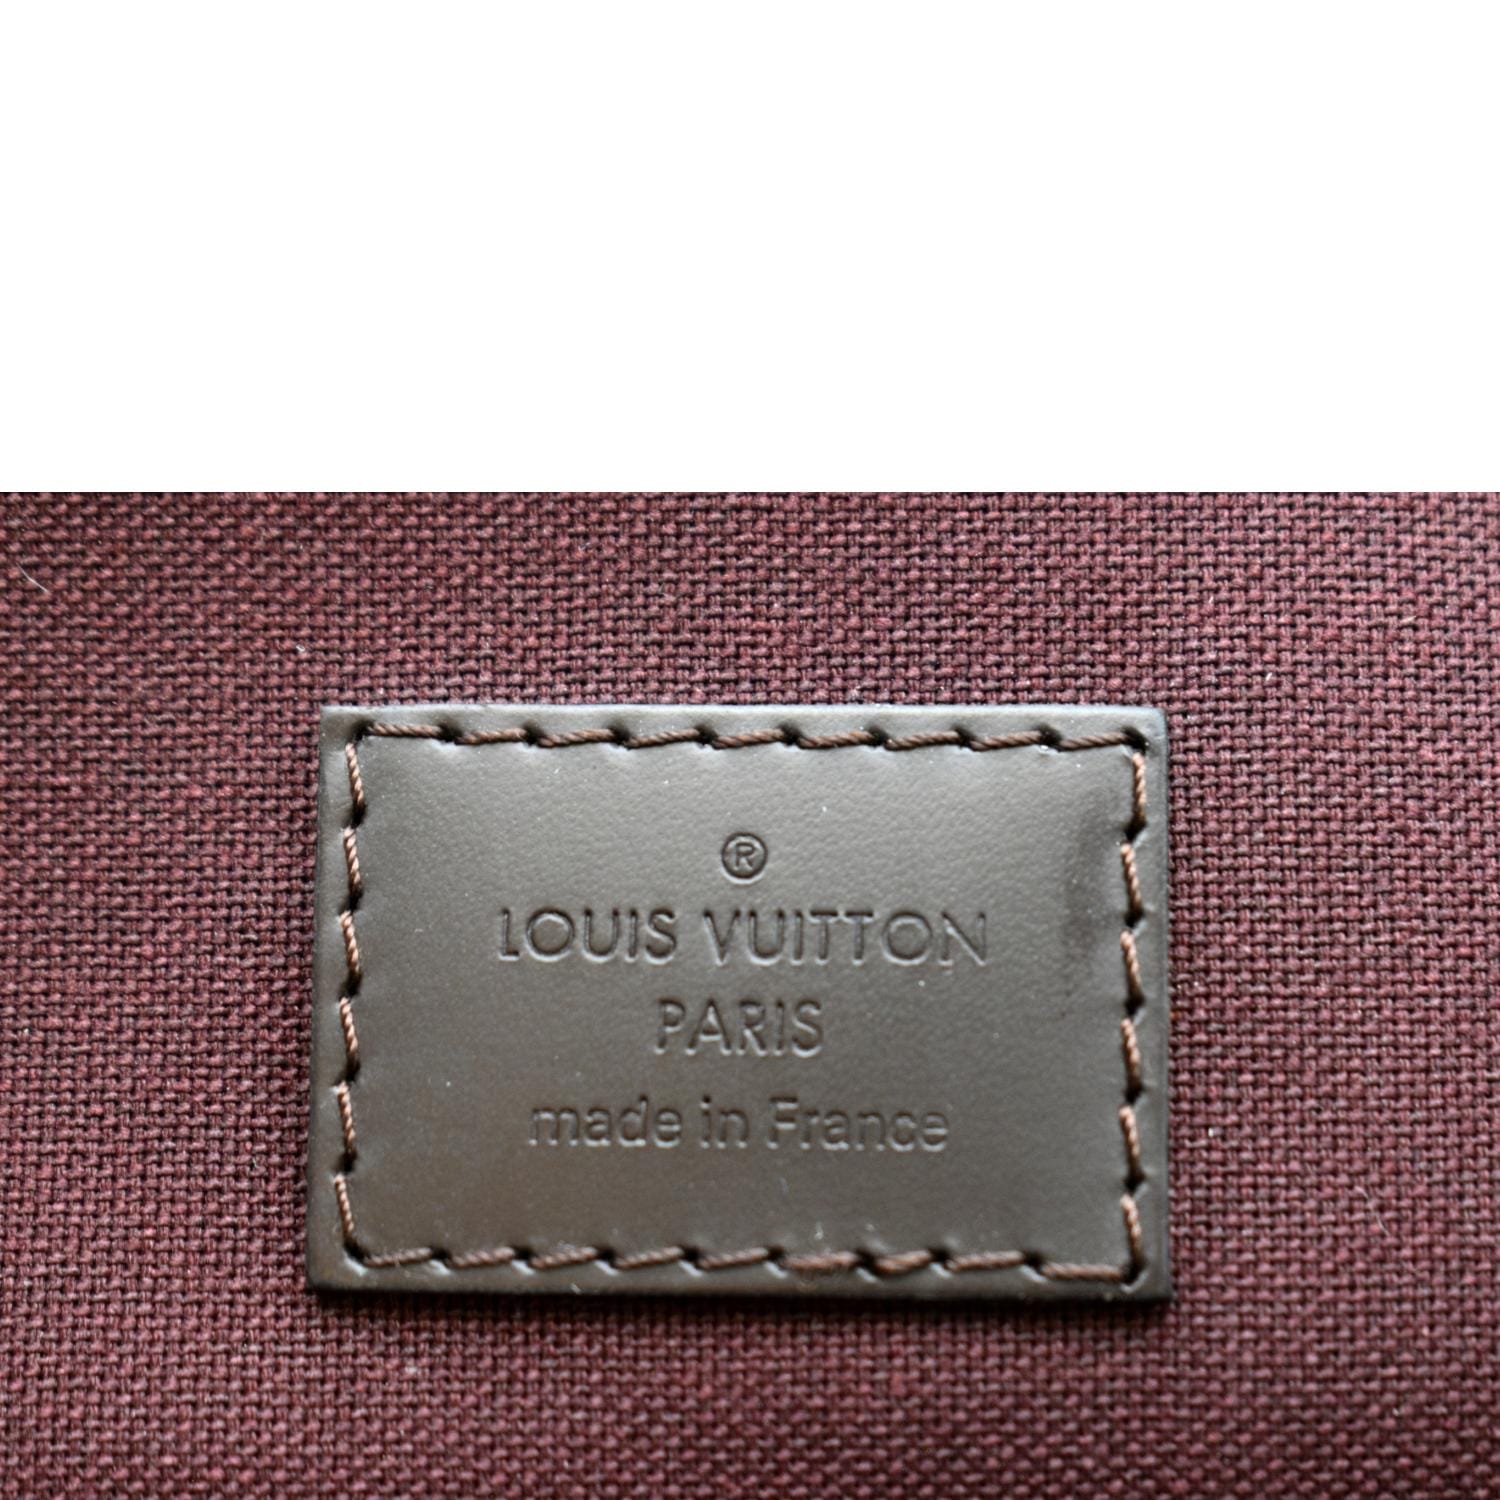 Louis Vuitton Brown Damier Ebene Félicie Pochette Gold Hardware, 2021 (Like New), Brown/Red Womens Handbag